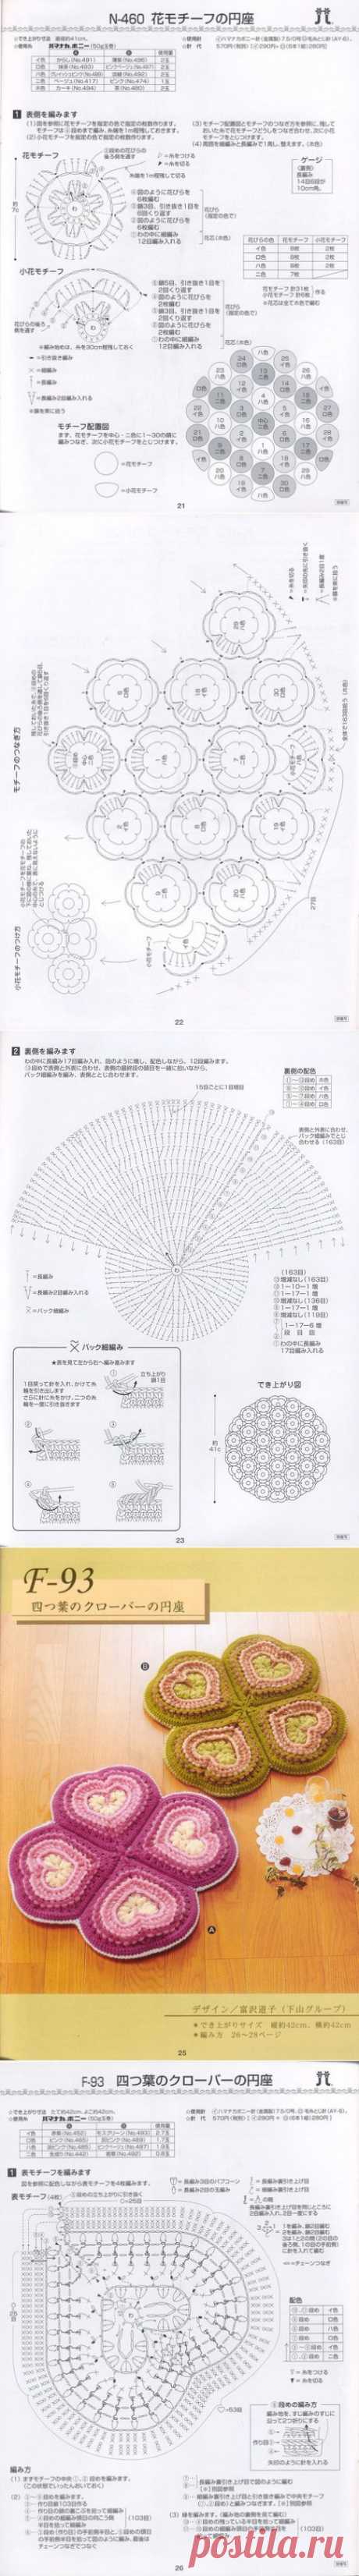 Техника японского вязания (крючок).